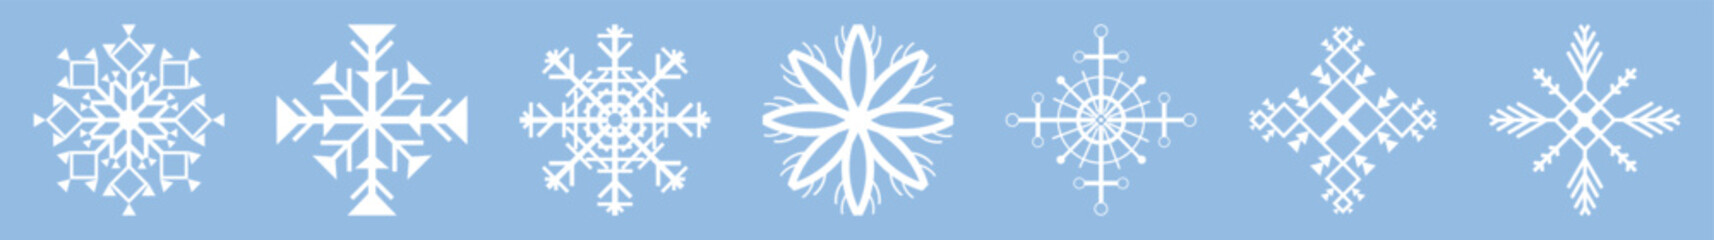 Set of many beautiful snowflakes on light blue background